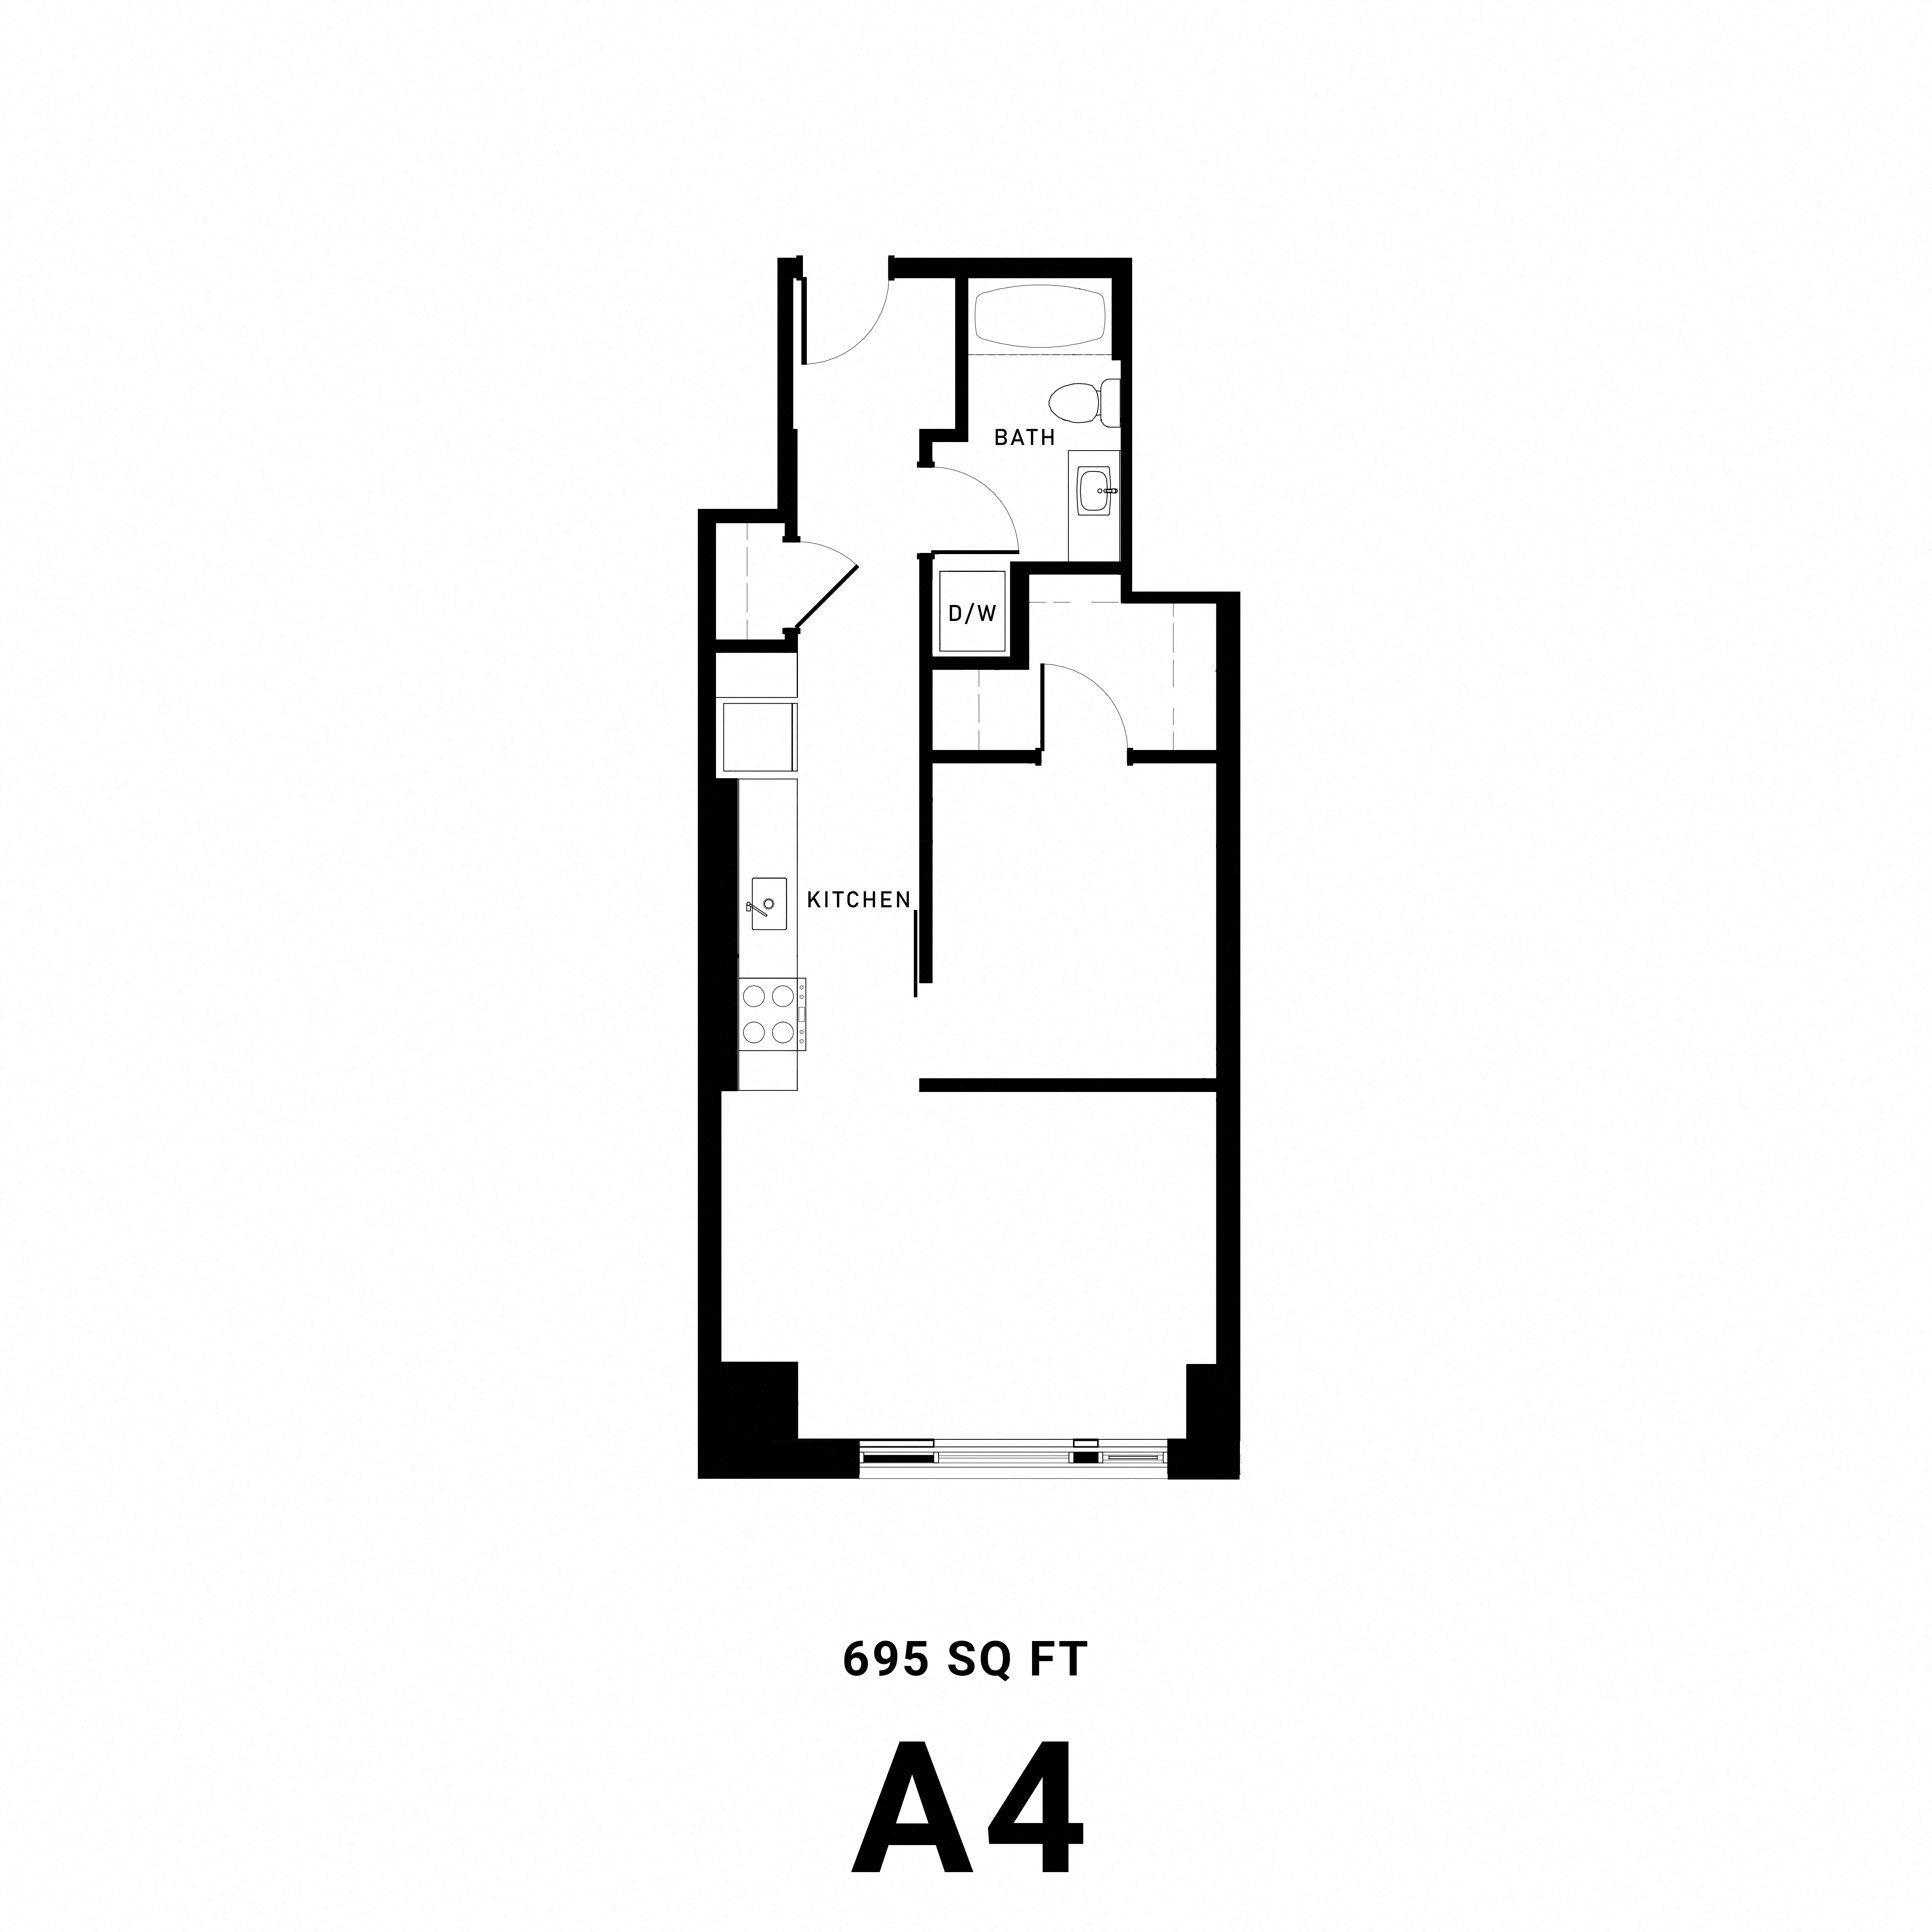 Floorplan A4